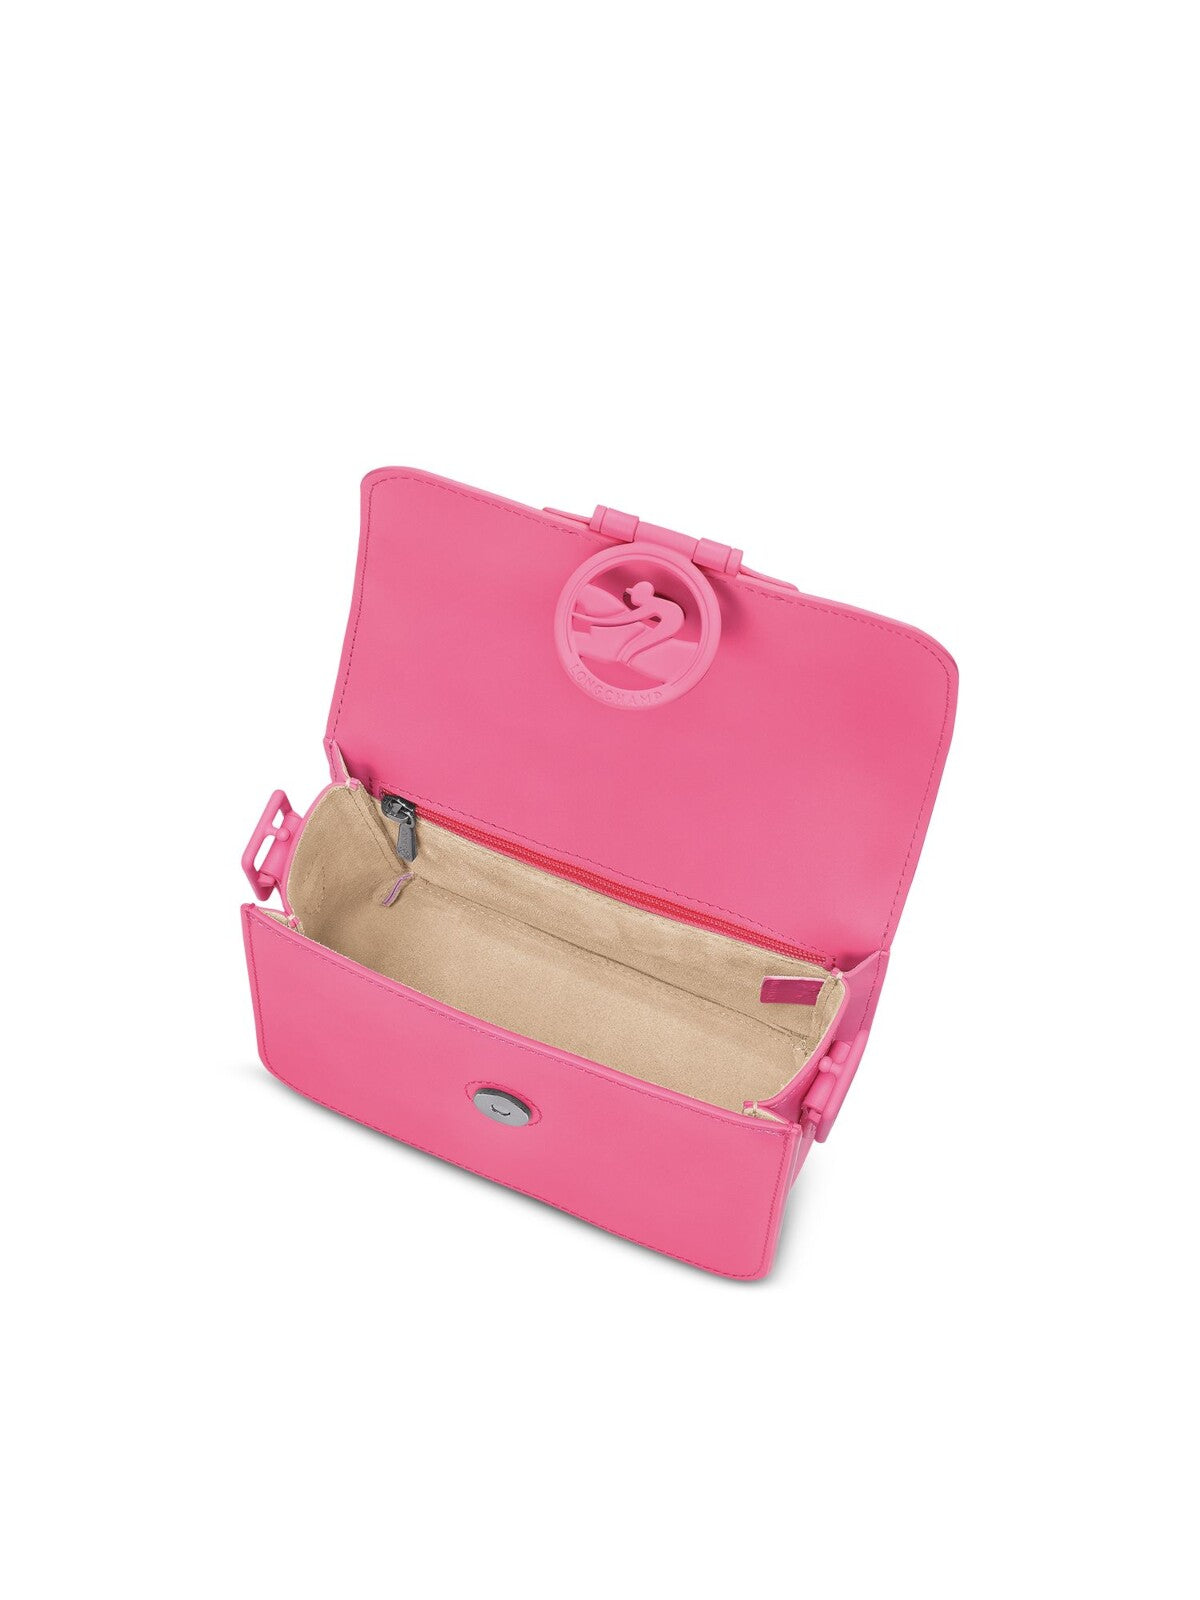 LONGCHAMP Women's Pink Solid Suede Adjustable Strap Crossbody Handbag Purse